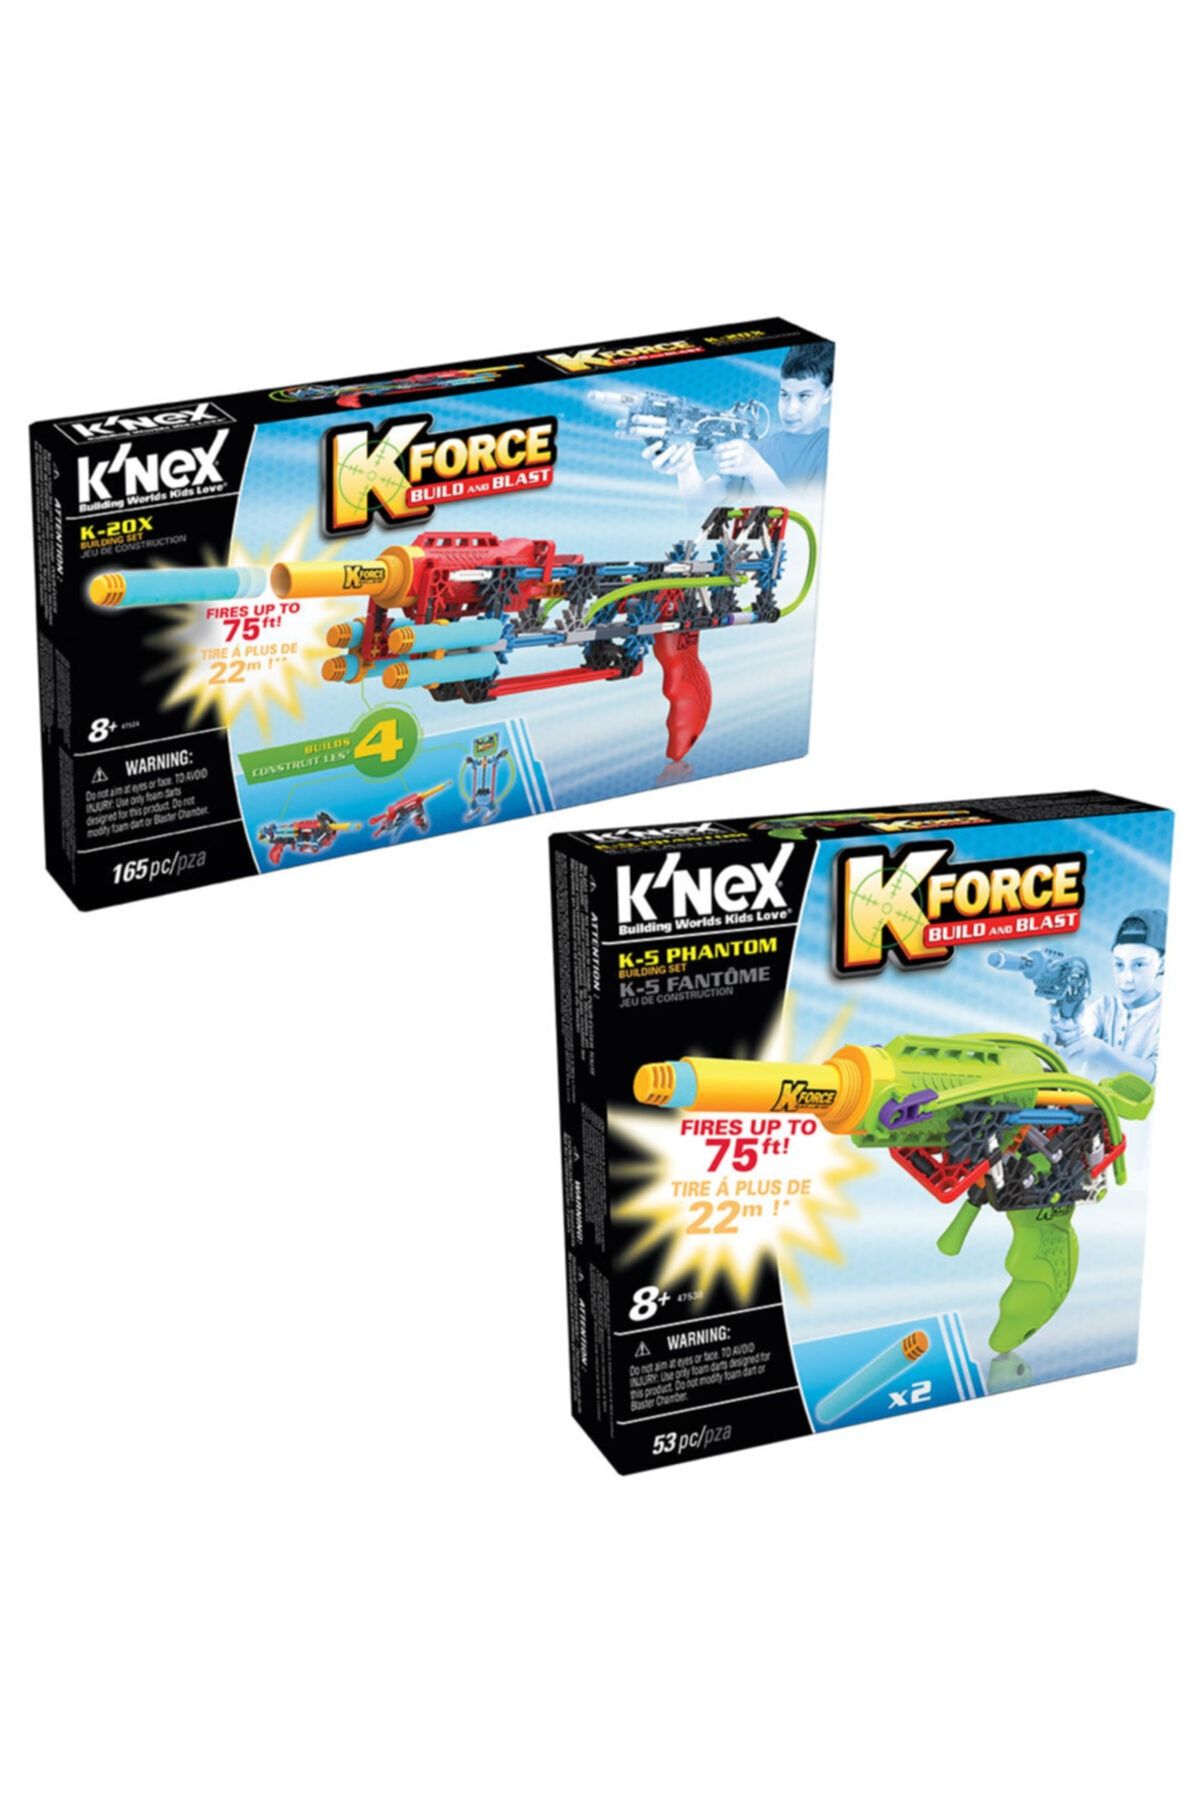 Knex K-5 Phantom Ve K-force K-20x Yapı Seti 47524